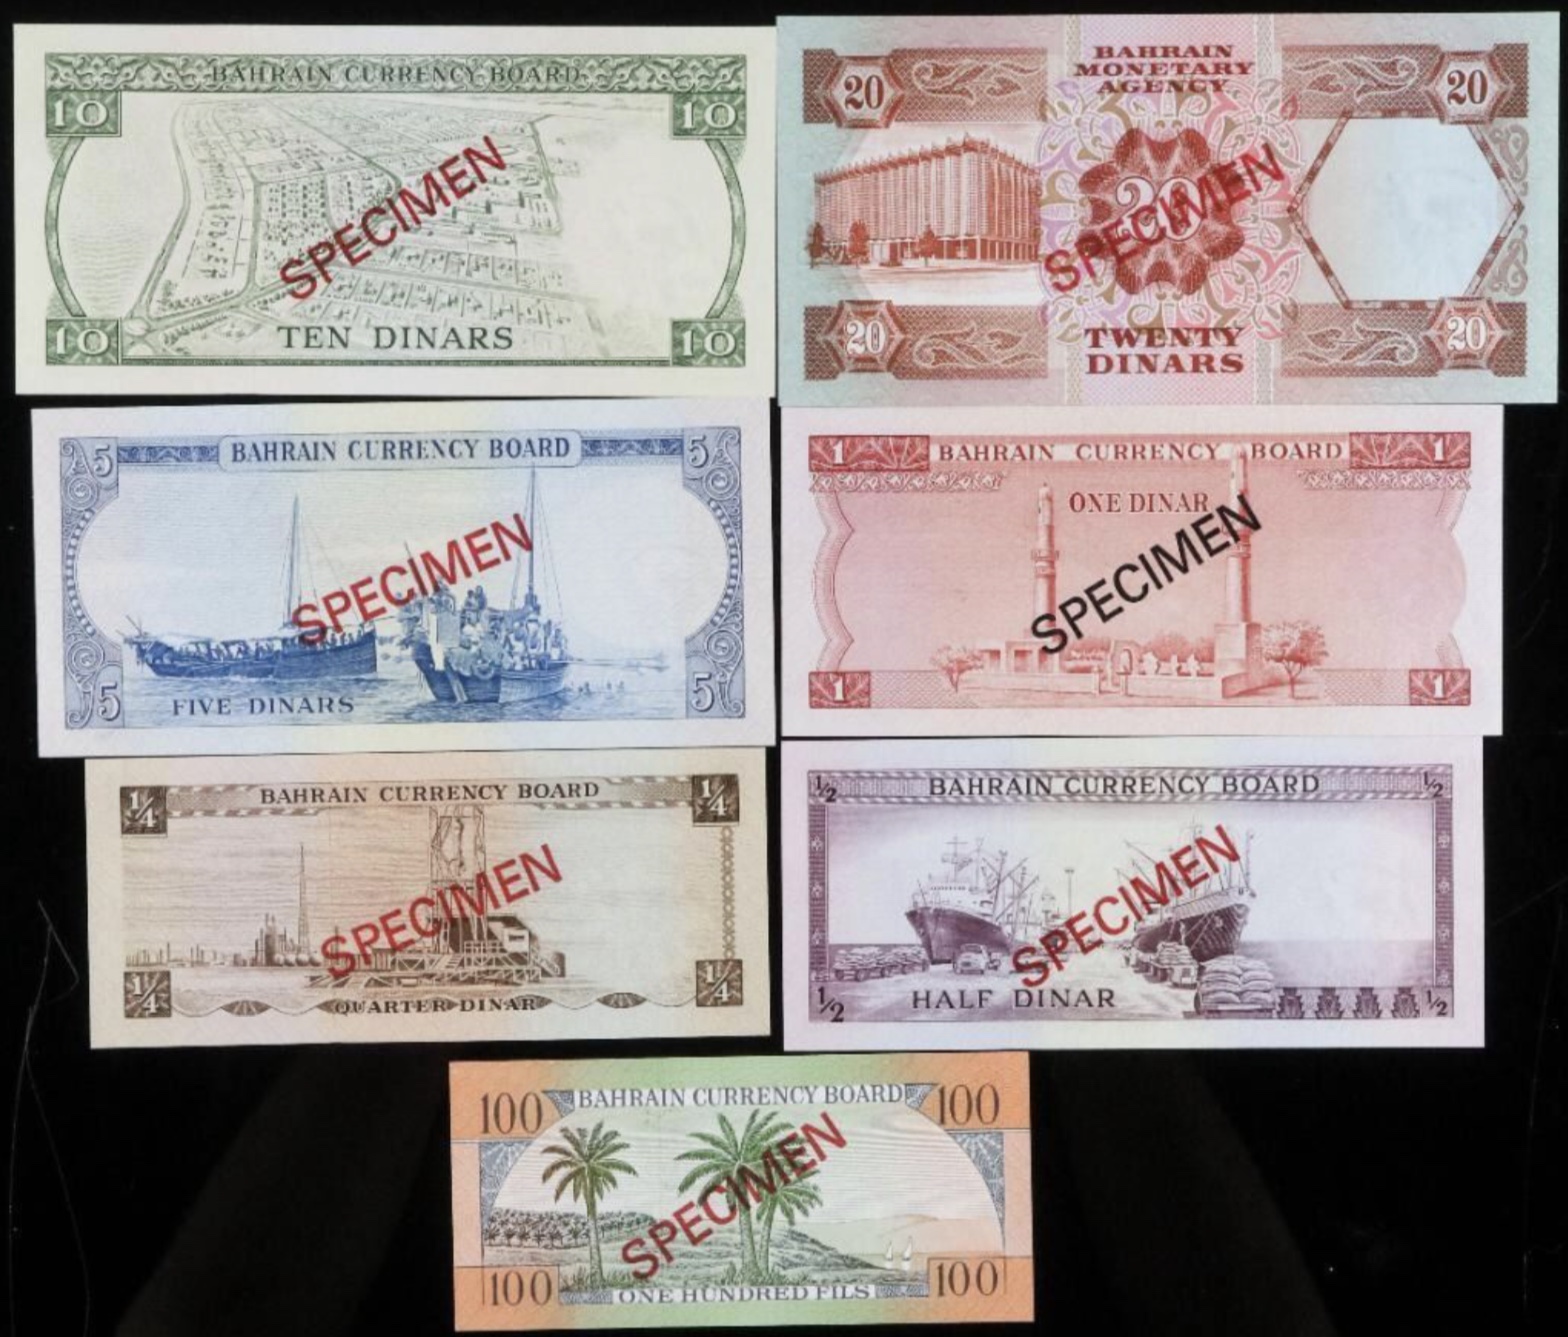 1978 Bahrain Monetary Agency Specimen Set of 7 Banknotes Same Serial Number (UNC)